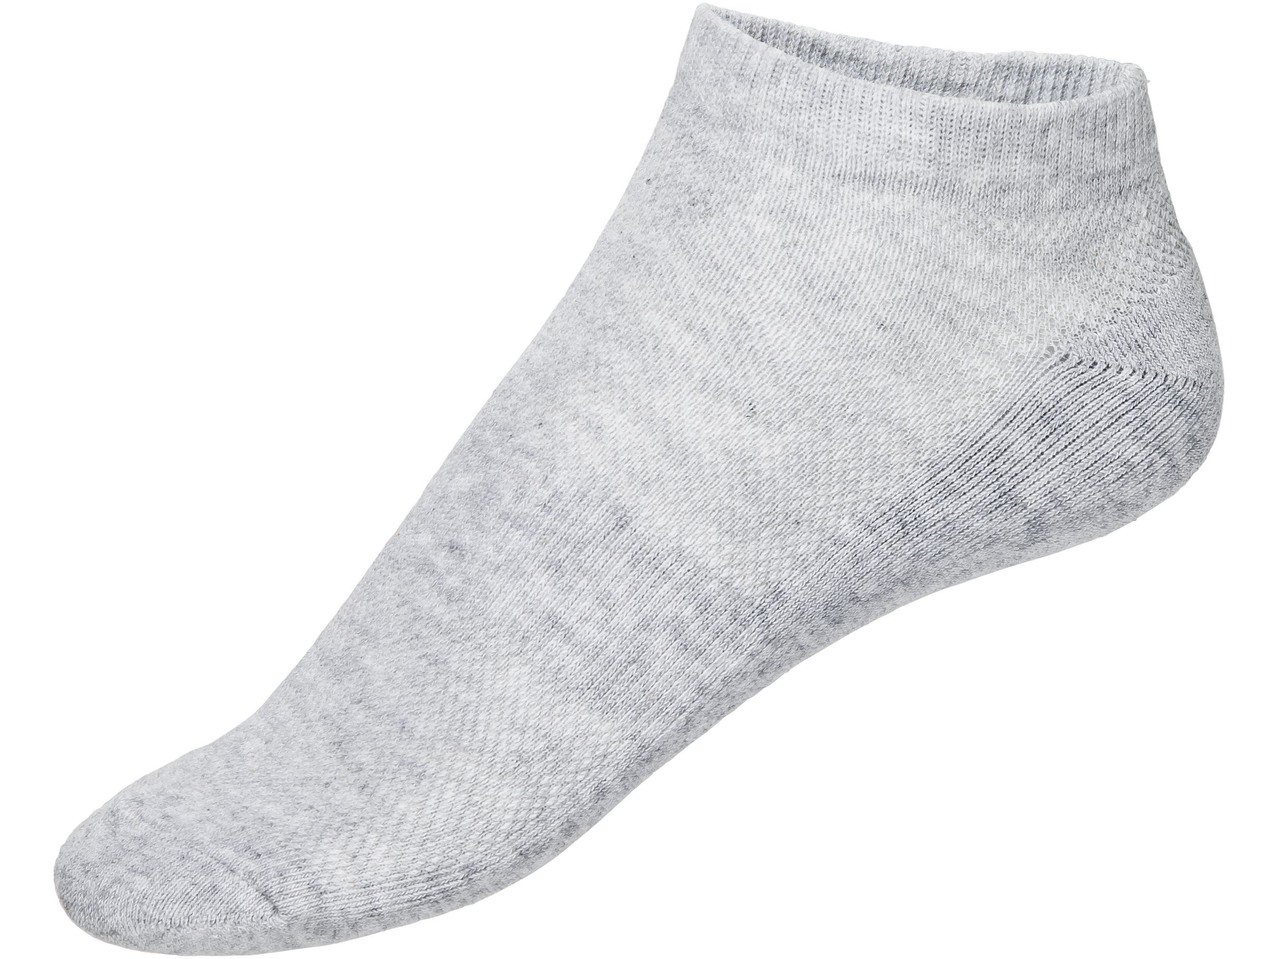 Ladies' Sports Socks, 5 pairs